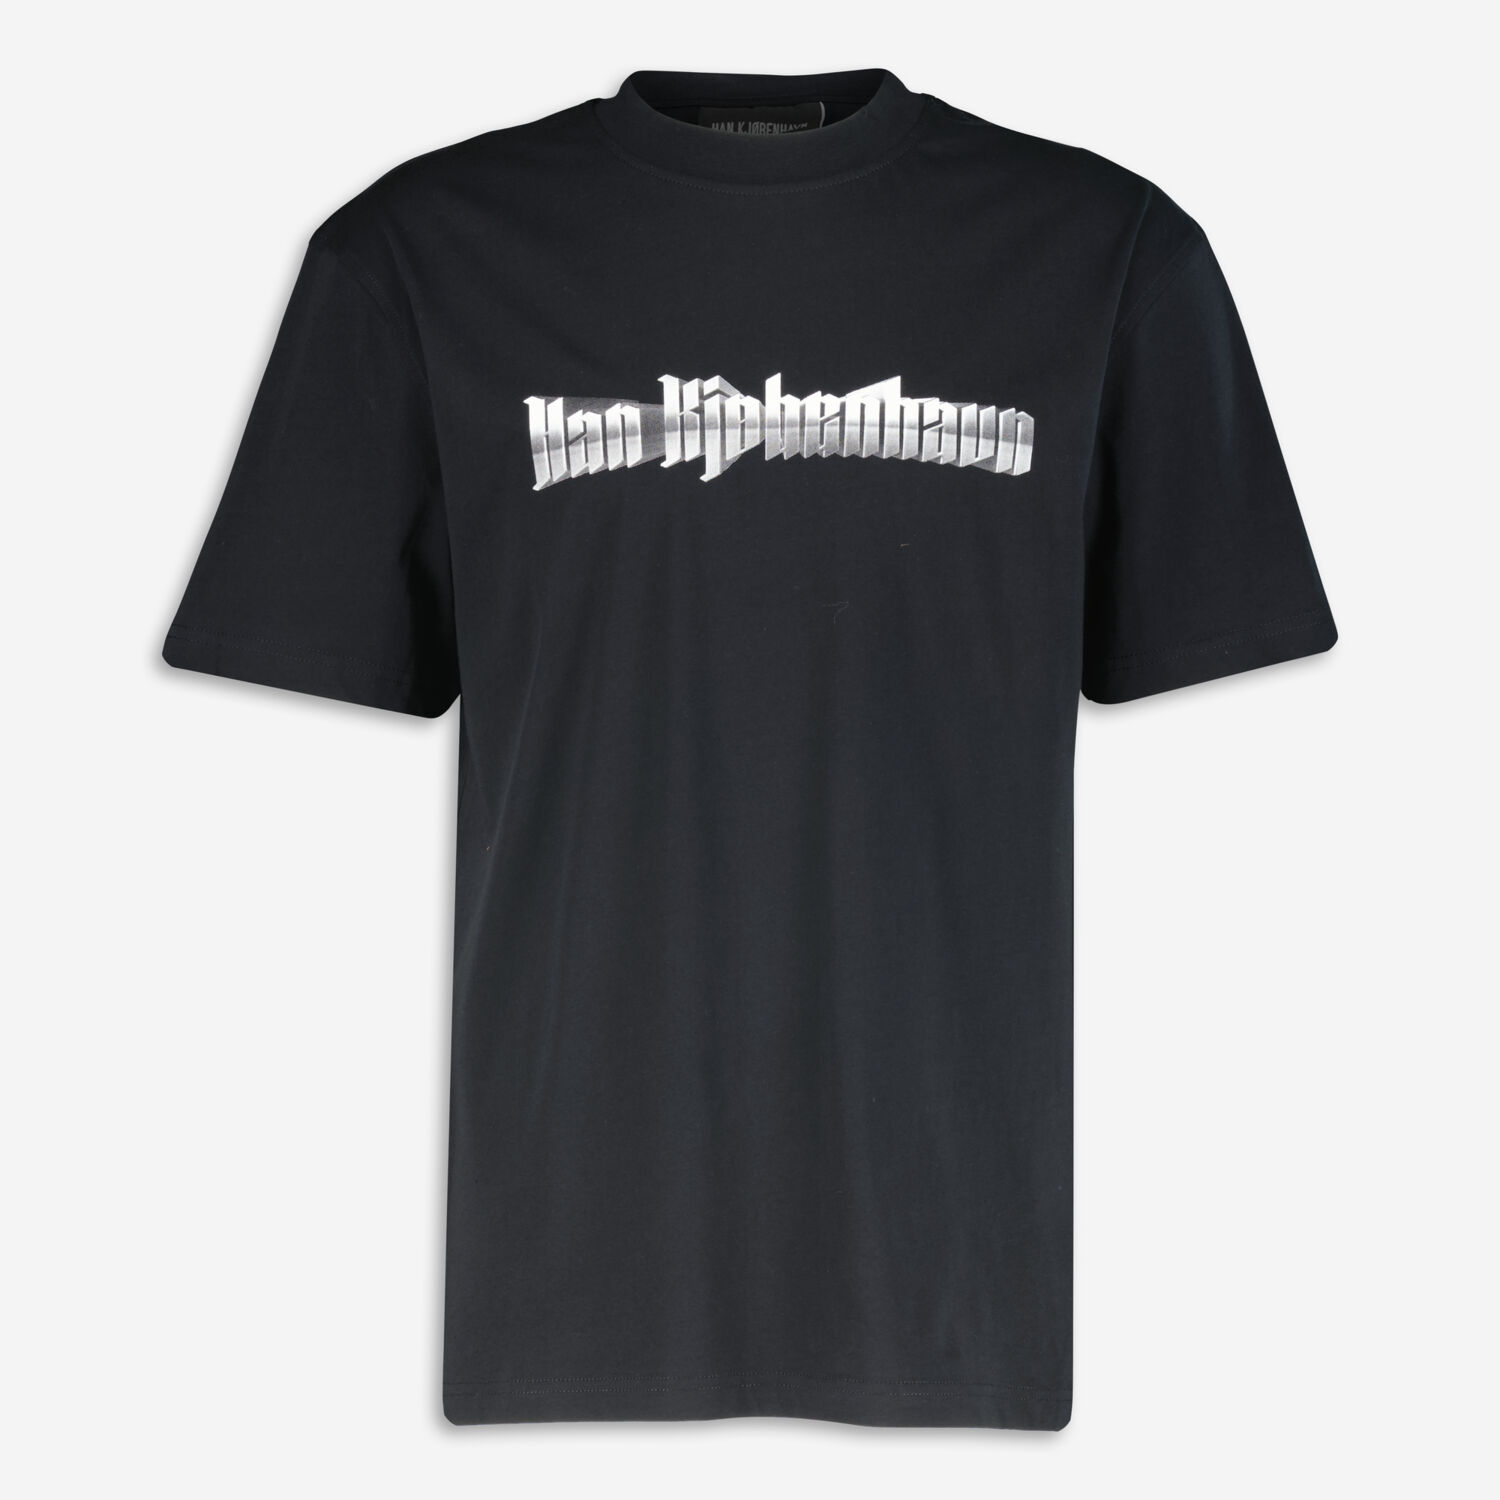 футболка han kjobenhavn размер xs черный Черная футболка с логотипом Han Kjobenhavn